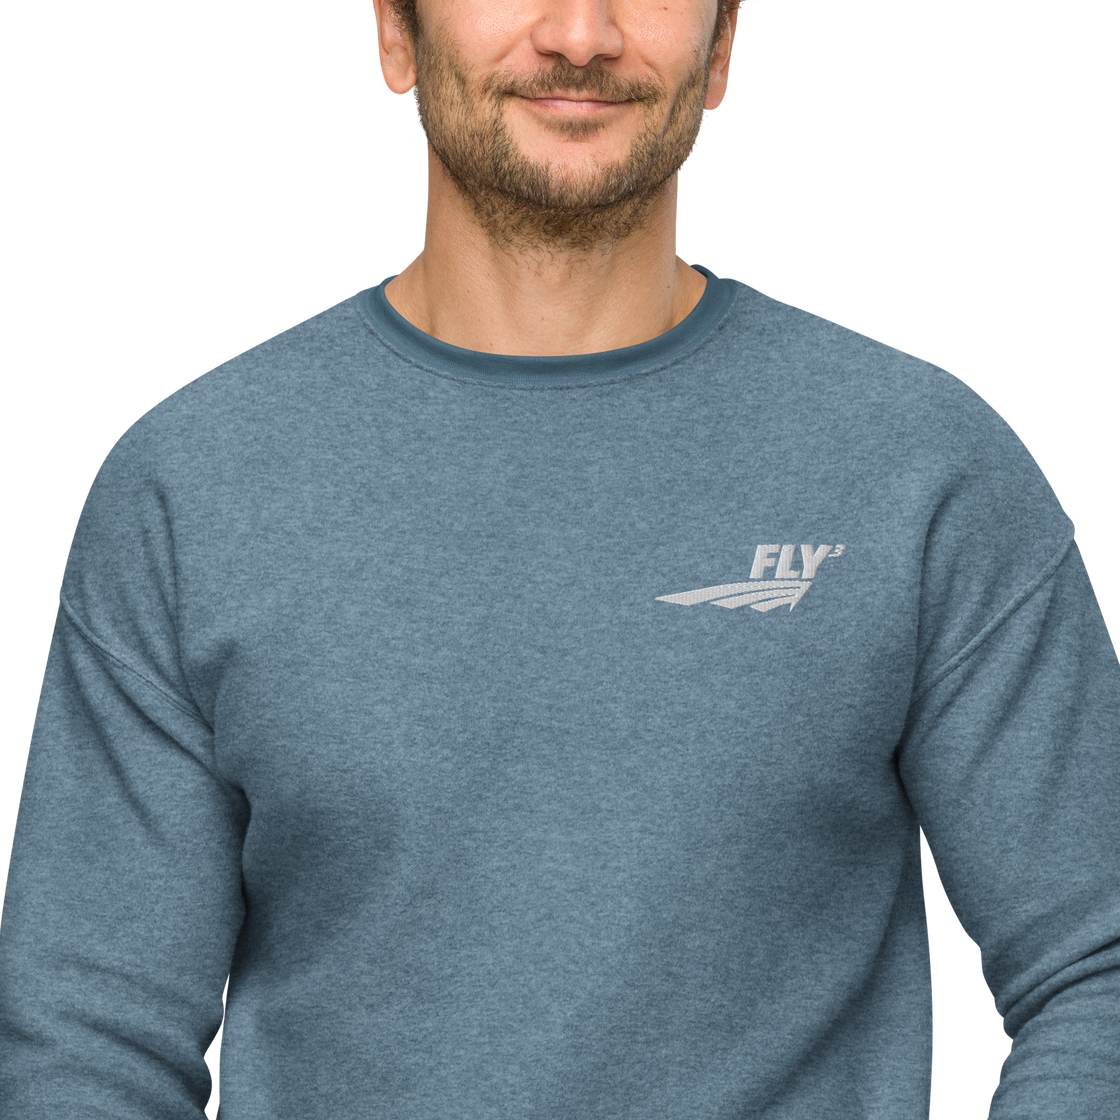 FLY³ sueded fleece sweatshirt | Flycube